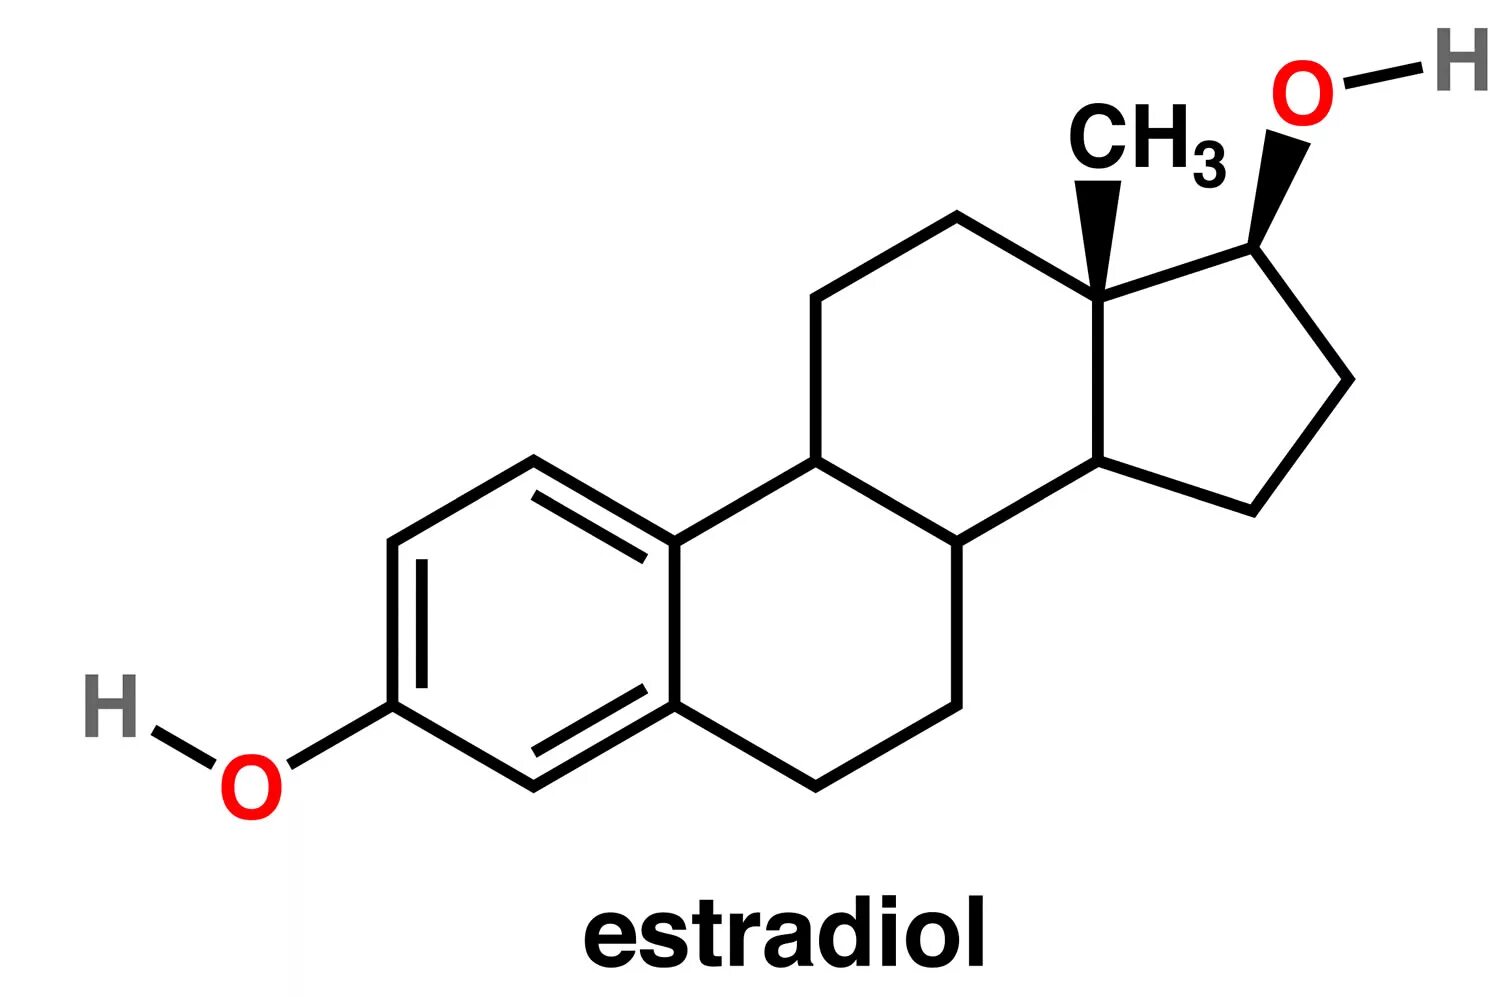 Пониженный гормон эстрадиол. Эстрон гормон формула. Структура вырабатывающая эстрадиол это. 17 Бета эстрадиол формула. Эстрадиол гормон формула.